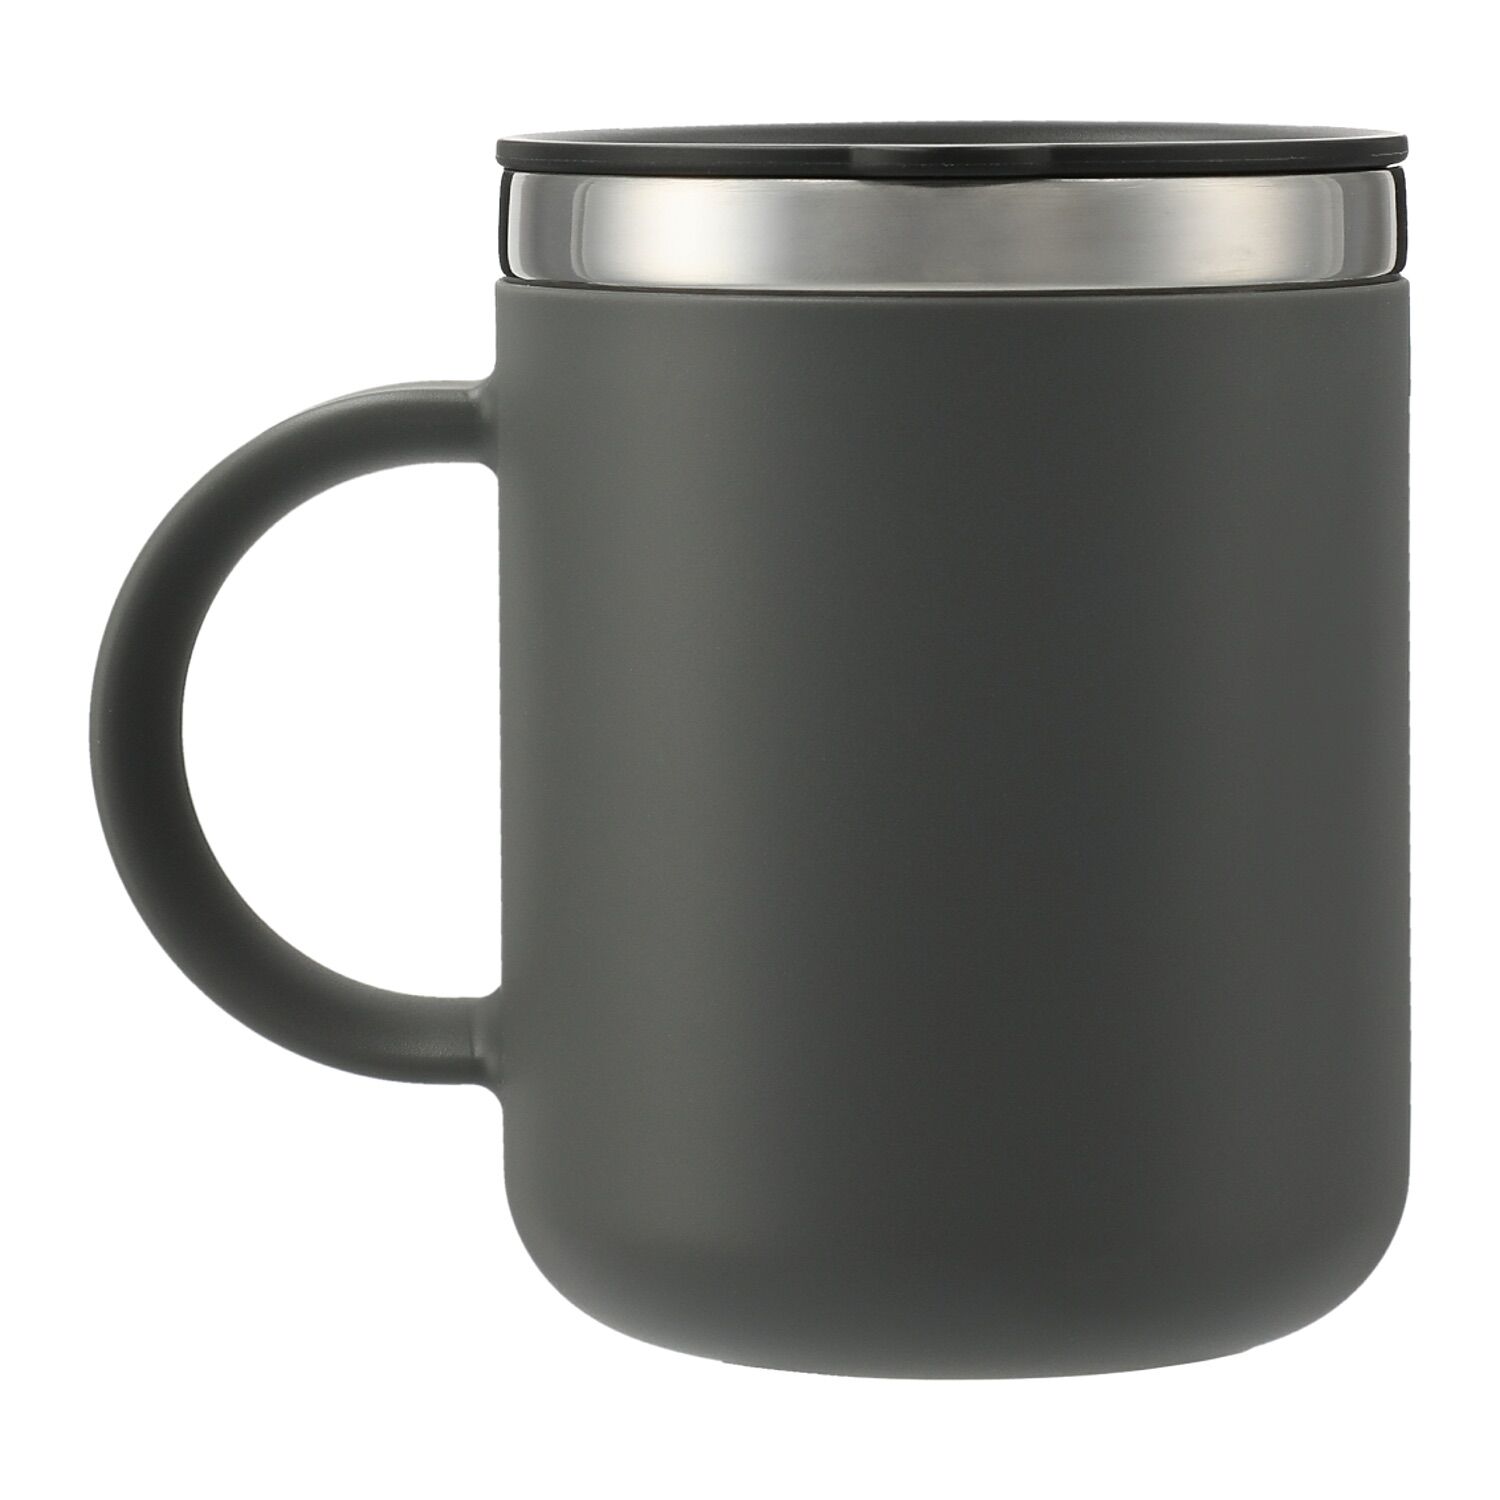 https://www.drivemerch.com/wp-content/uploads/2022/08/branded-hydro-flask-coffee-mug-12-oz-stone.jpg